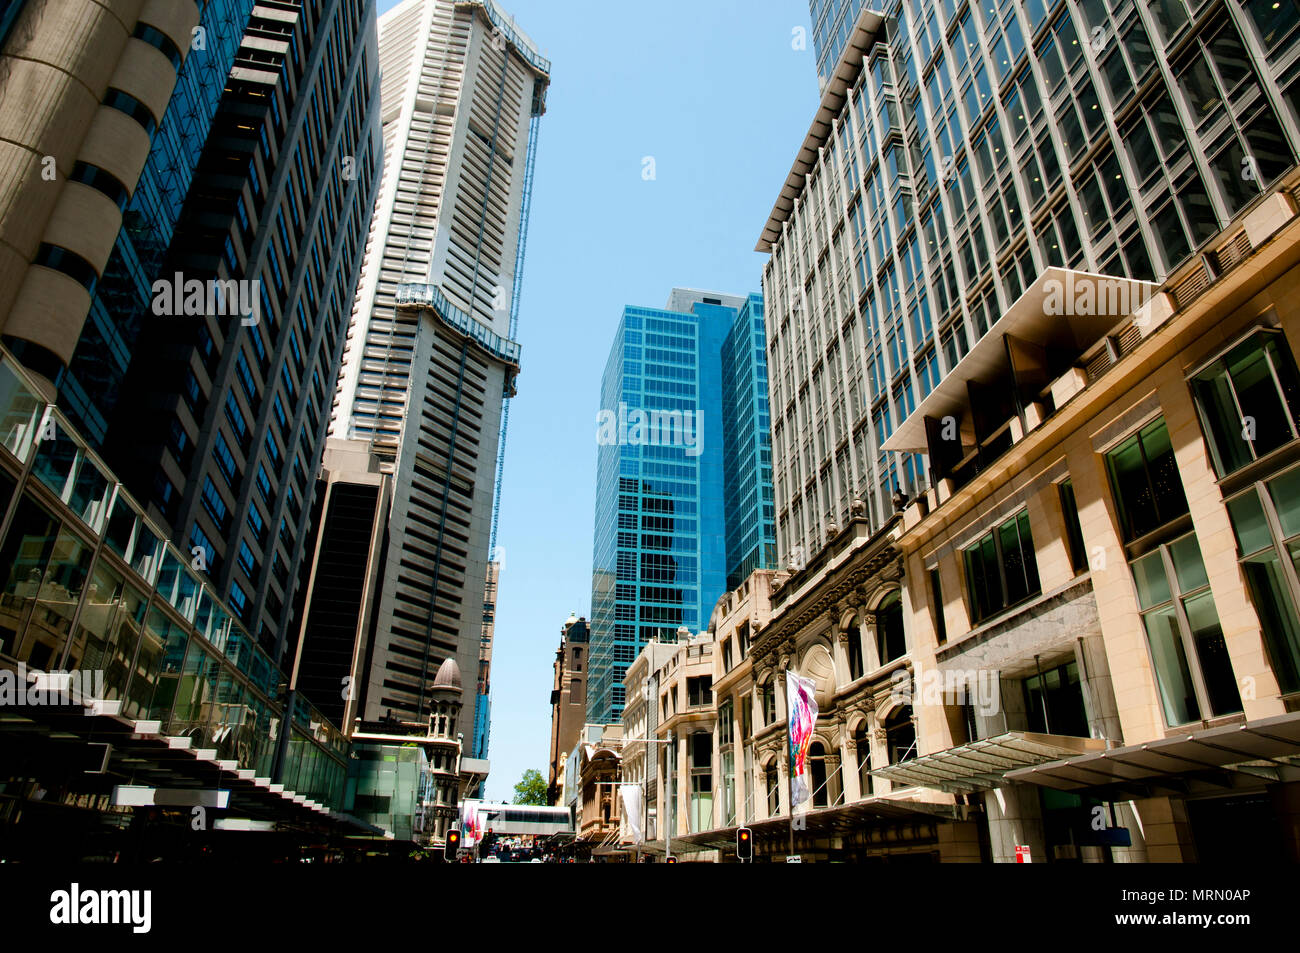 George Street - Sydney - Australia Stock Photo